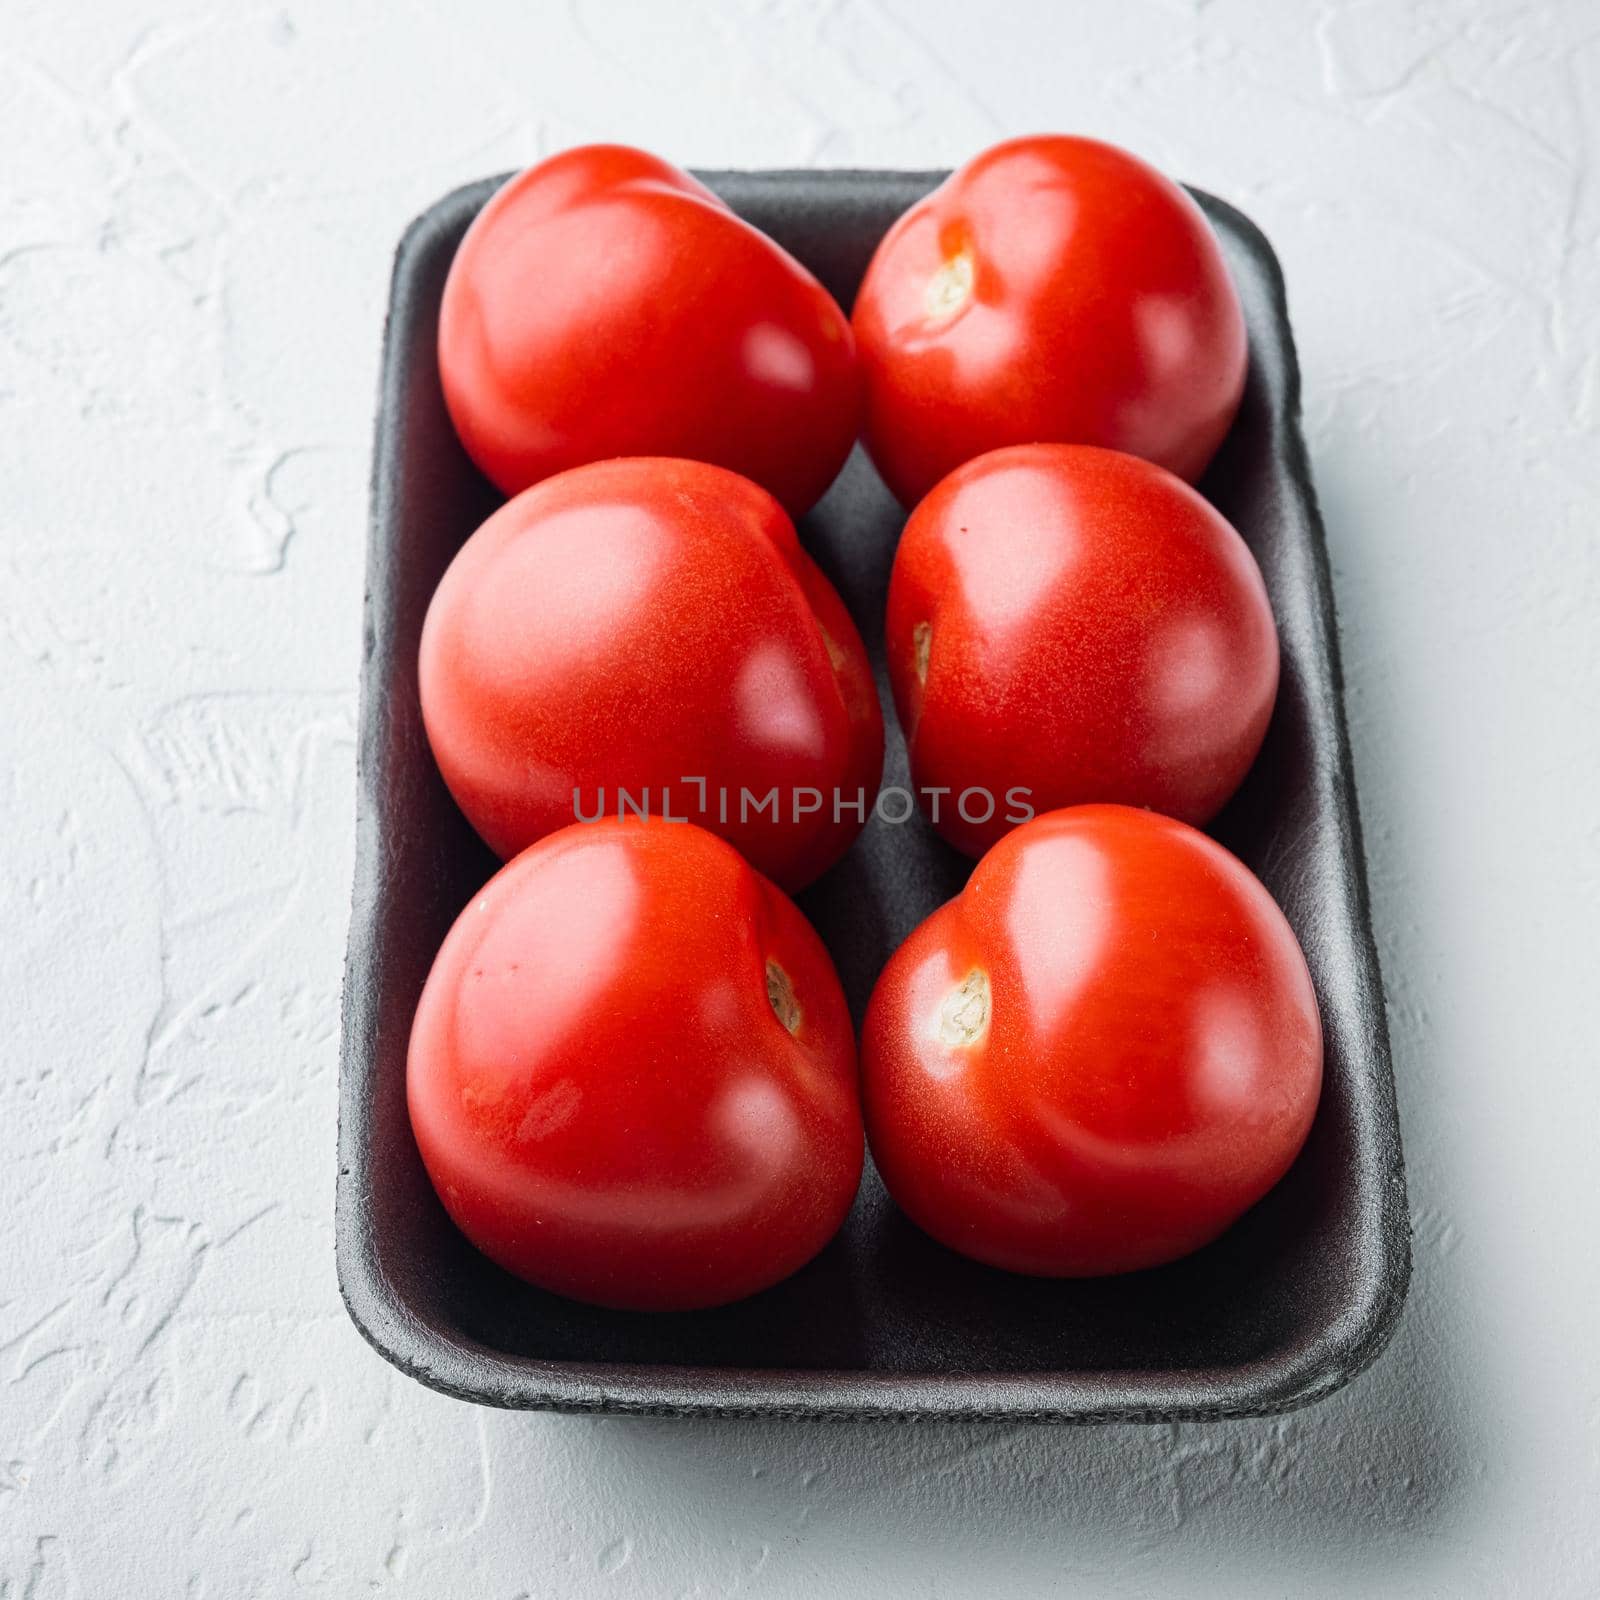 Red ripe tomatoe, on white background by Ilianesolenyi